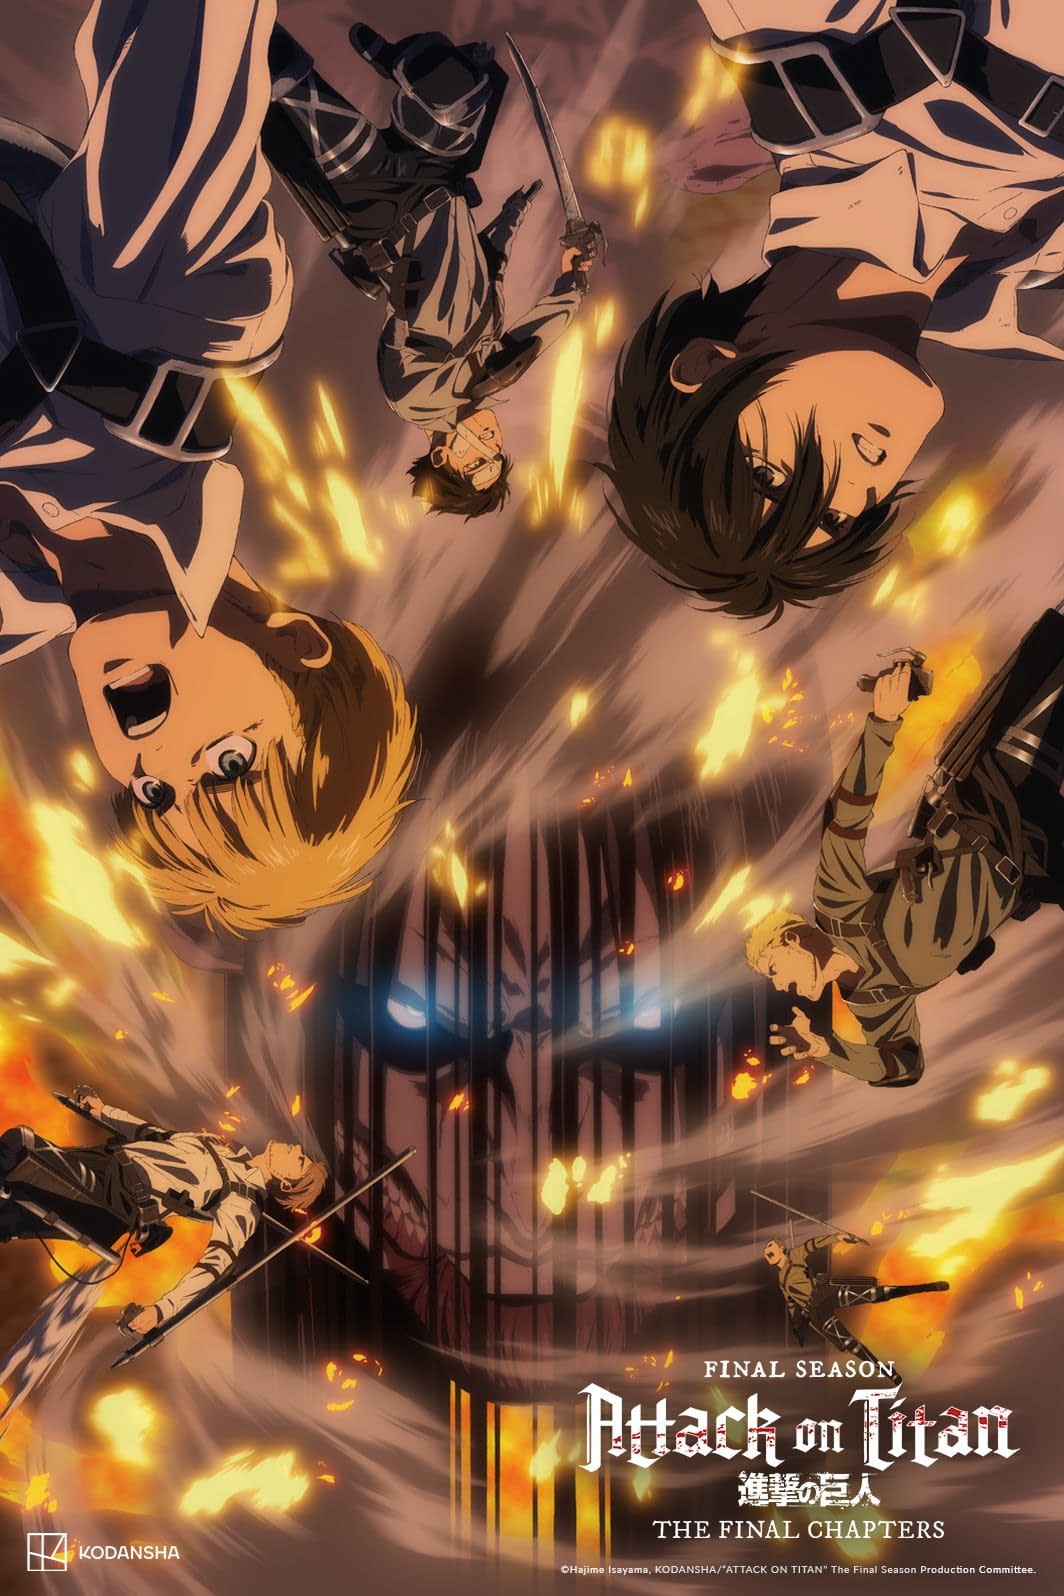 Attack on Titan Final Season THE FINAL CHAPTERS Special 2 confirma data de  estreia - Crunchyroll Notícias